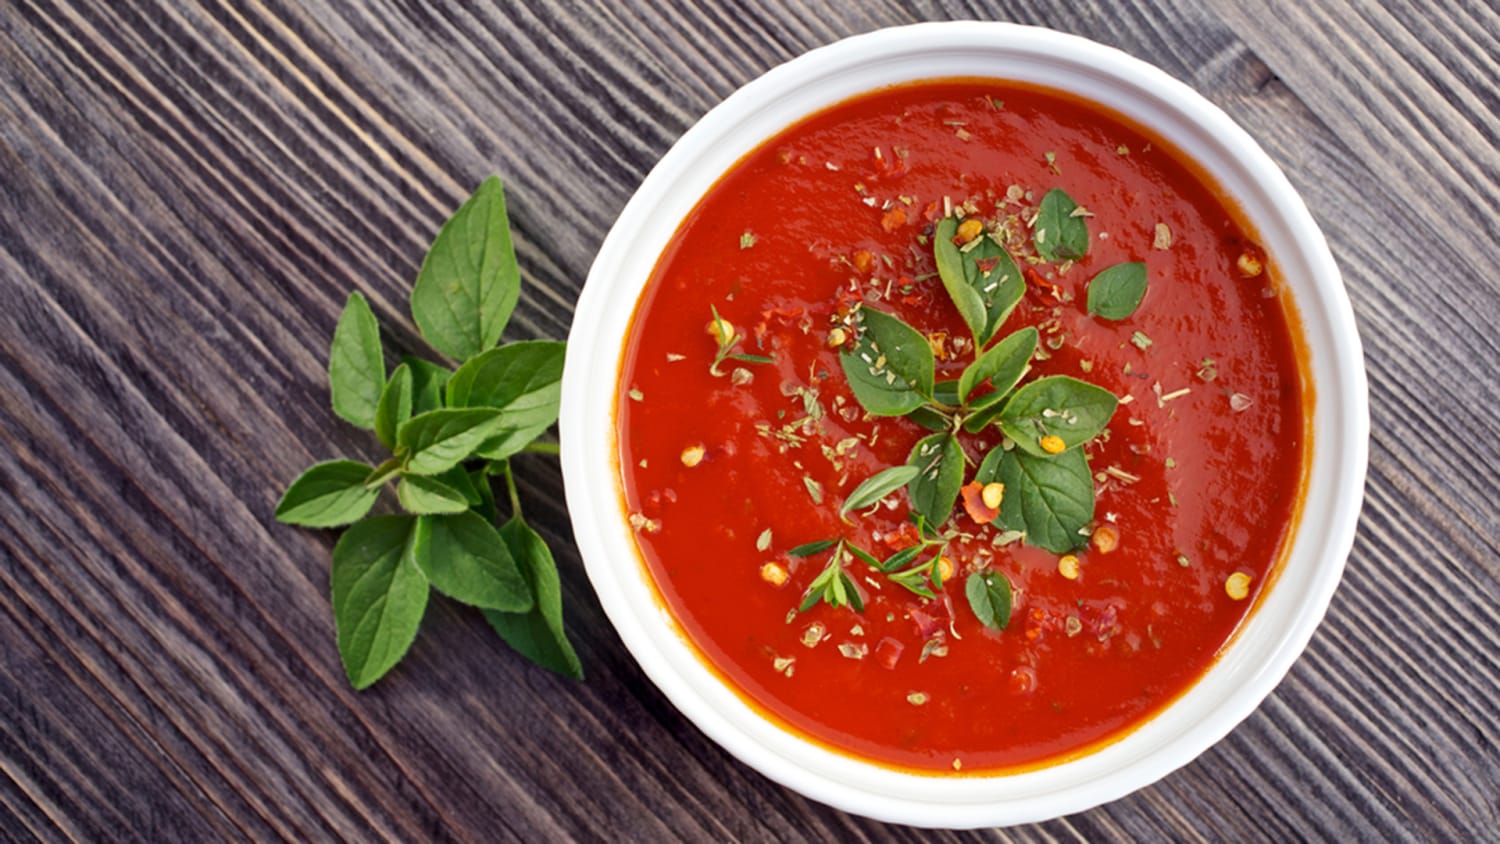 Easy Tomato Sauce recipe with vegetable scraps